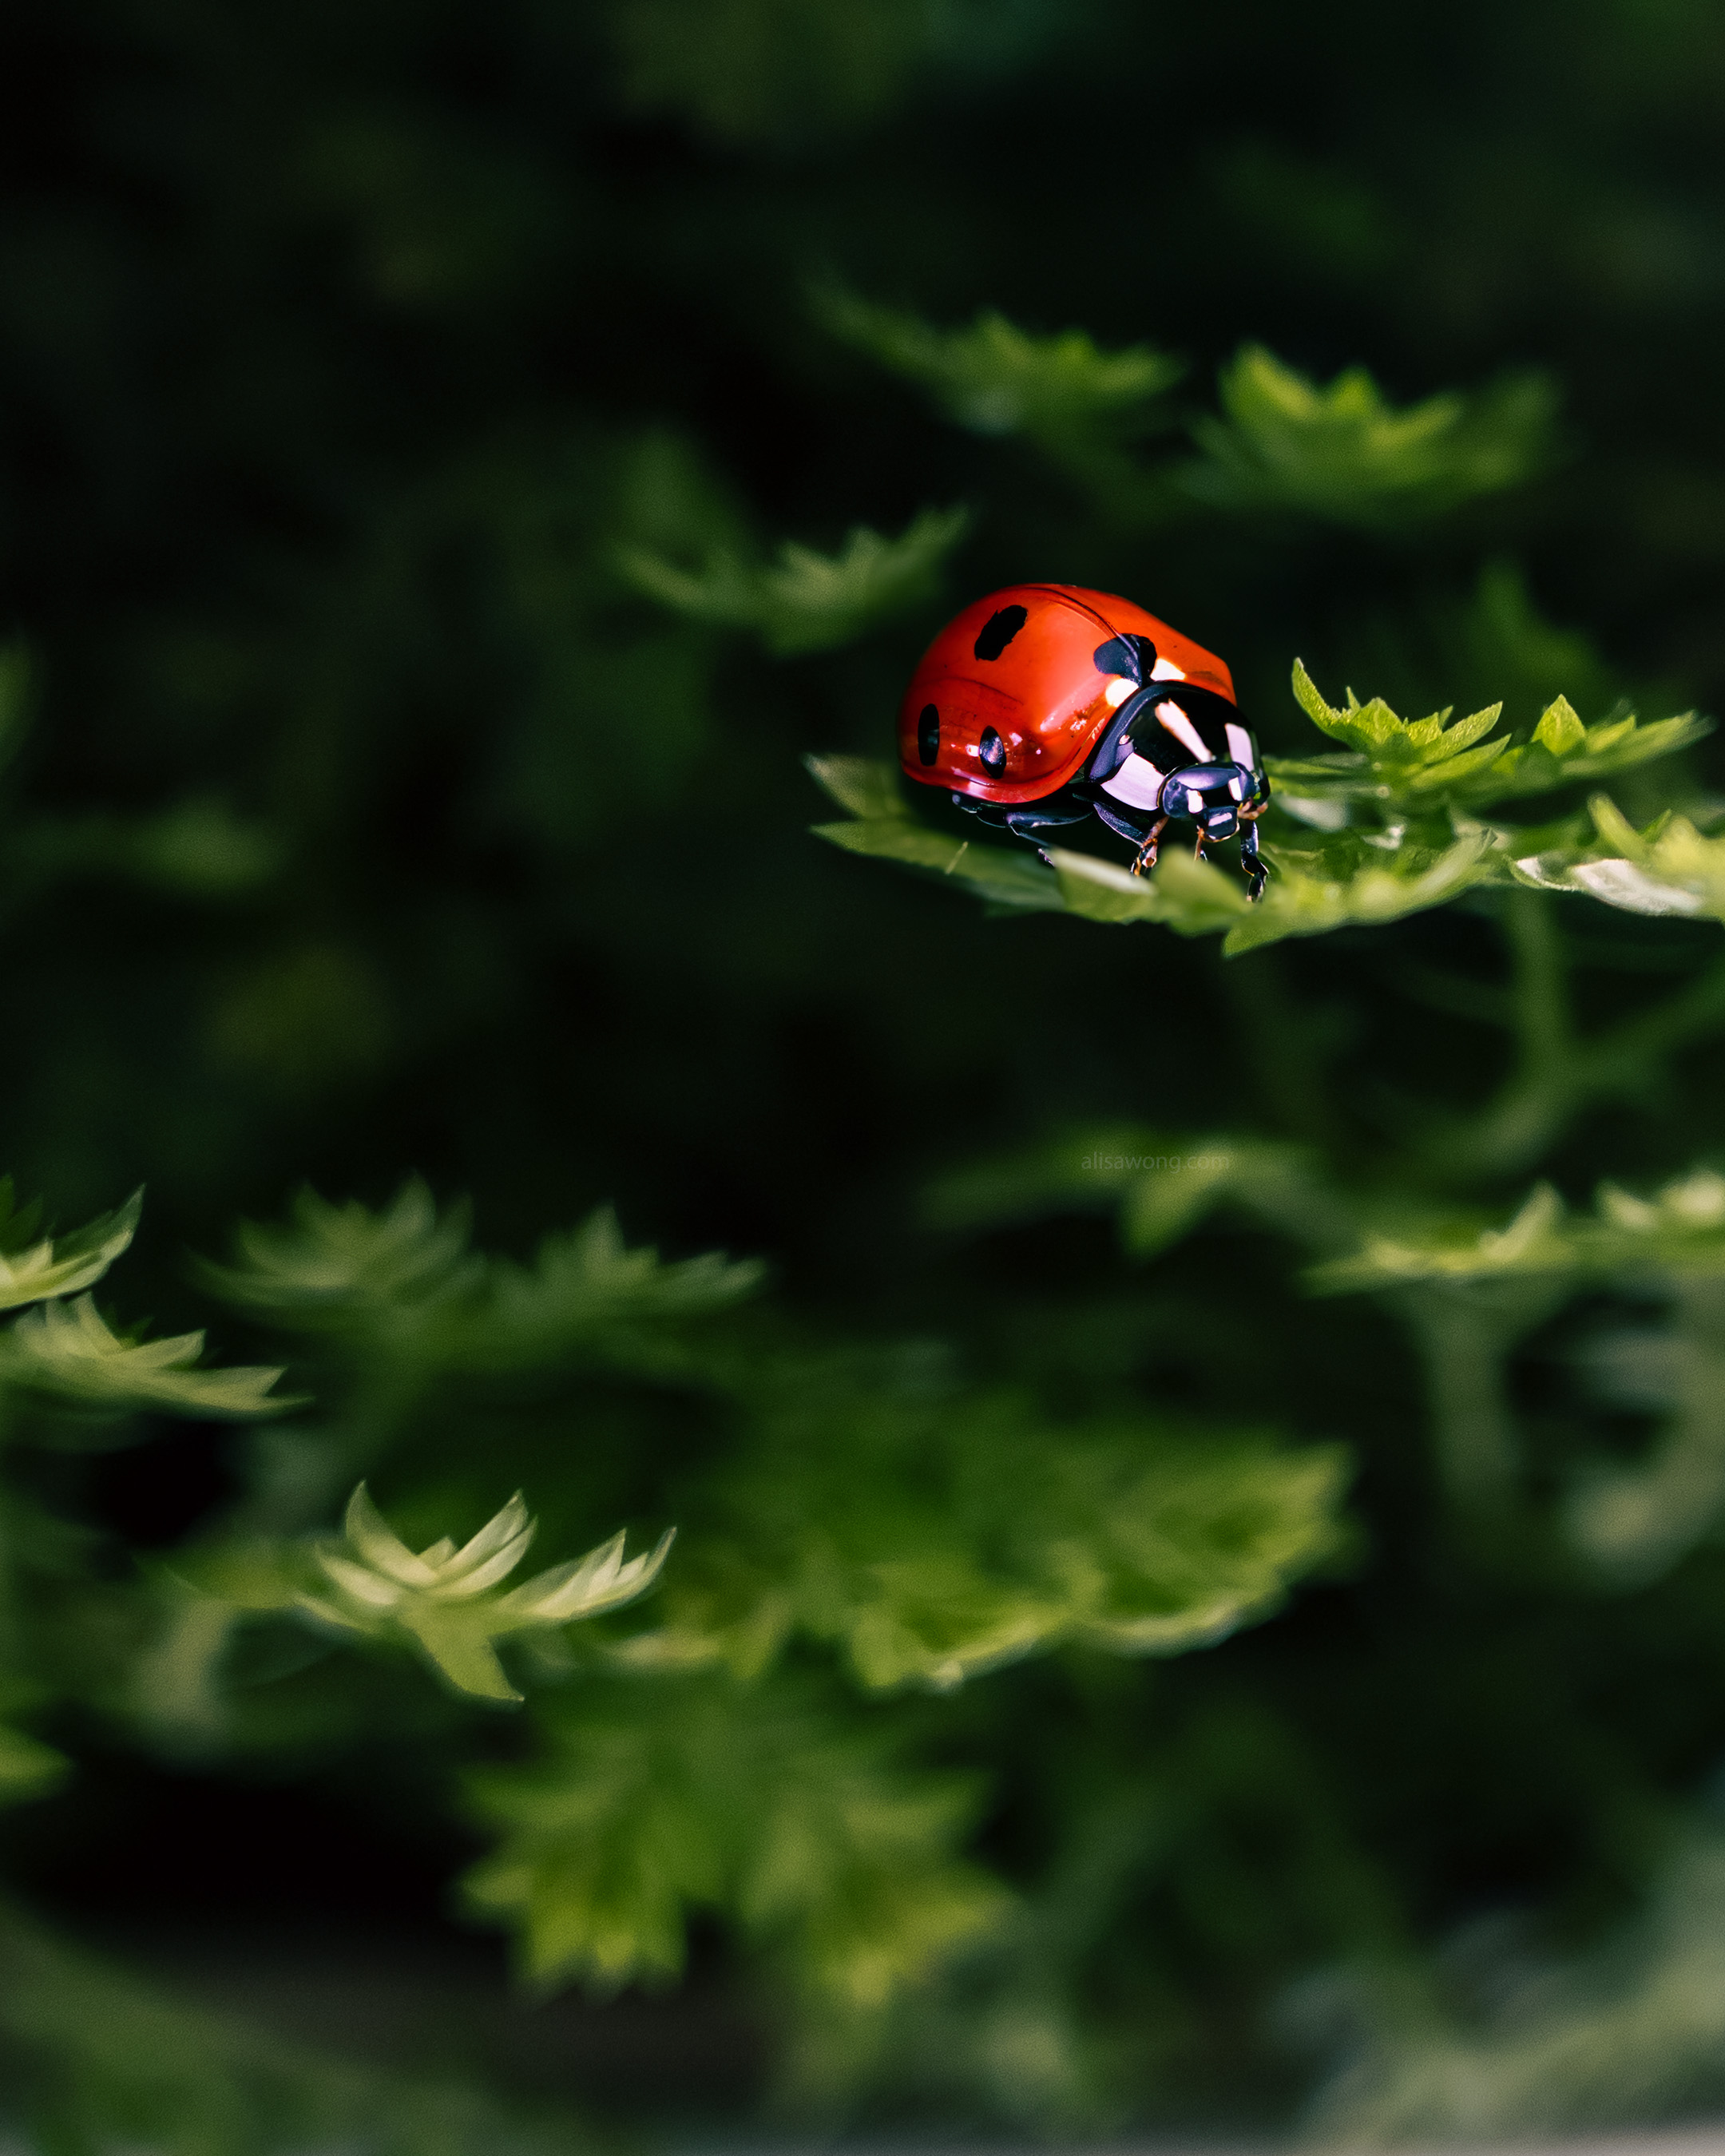 Close-up of ladybug figurine resting on a leaf